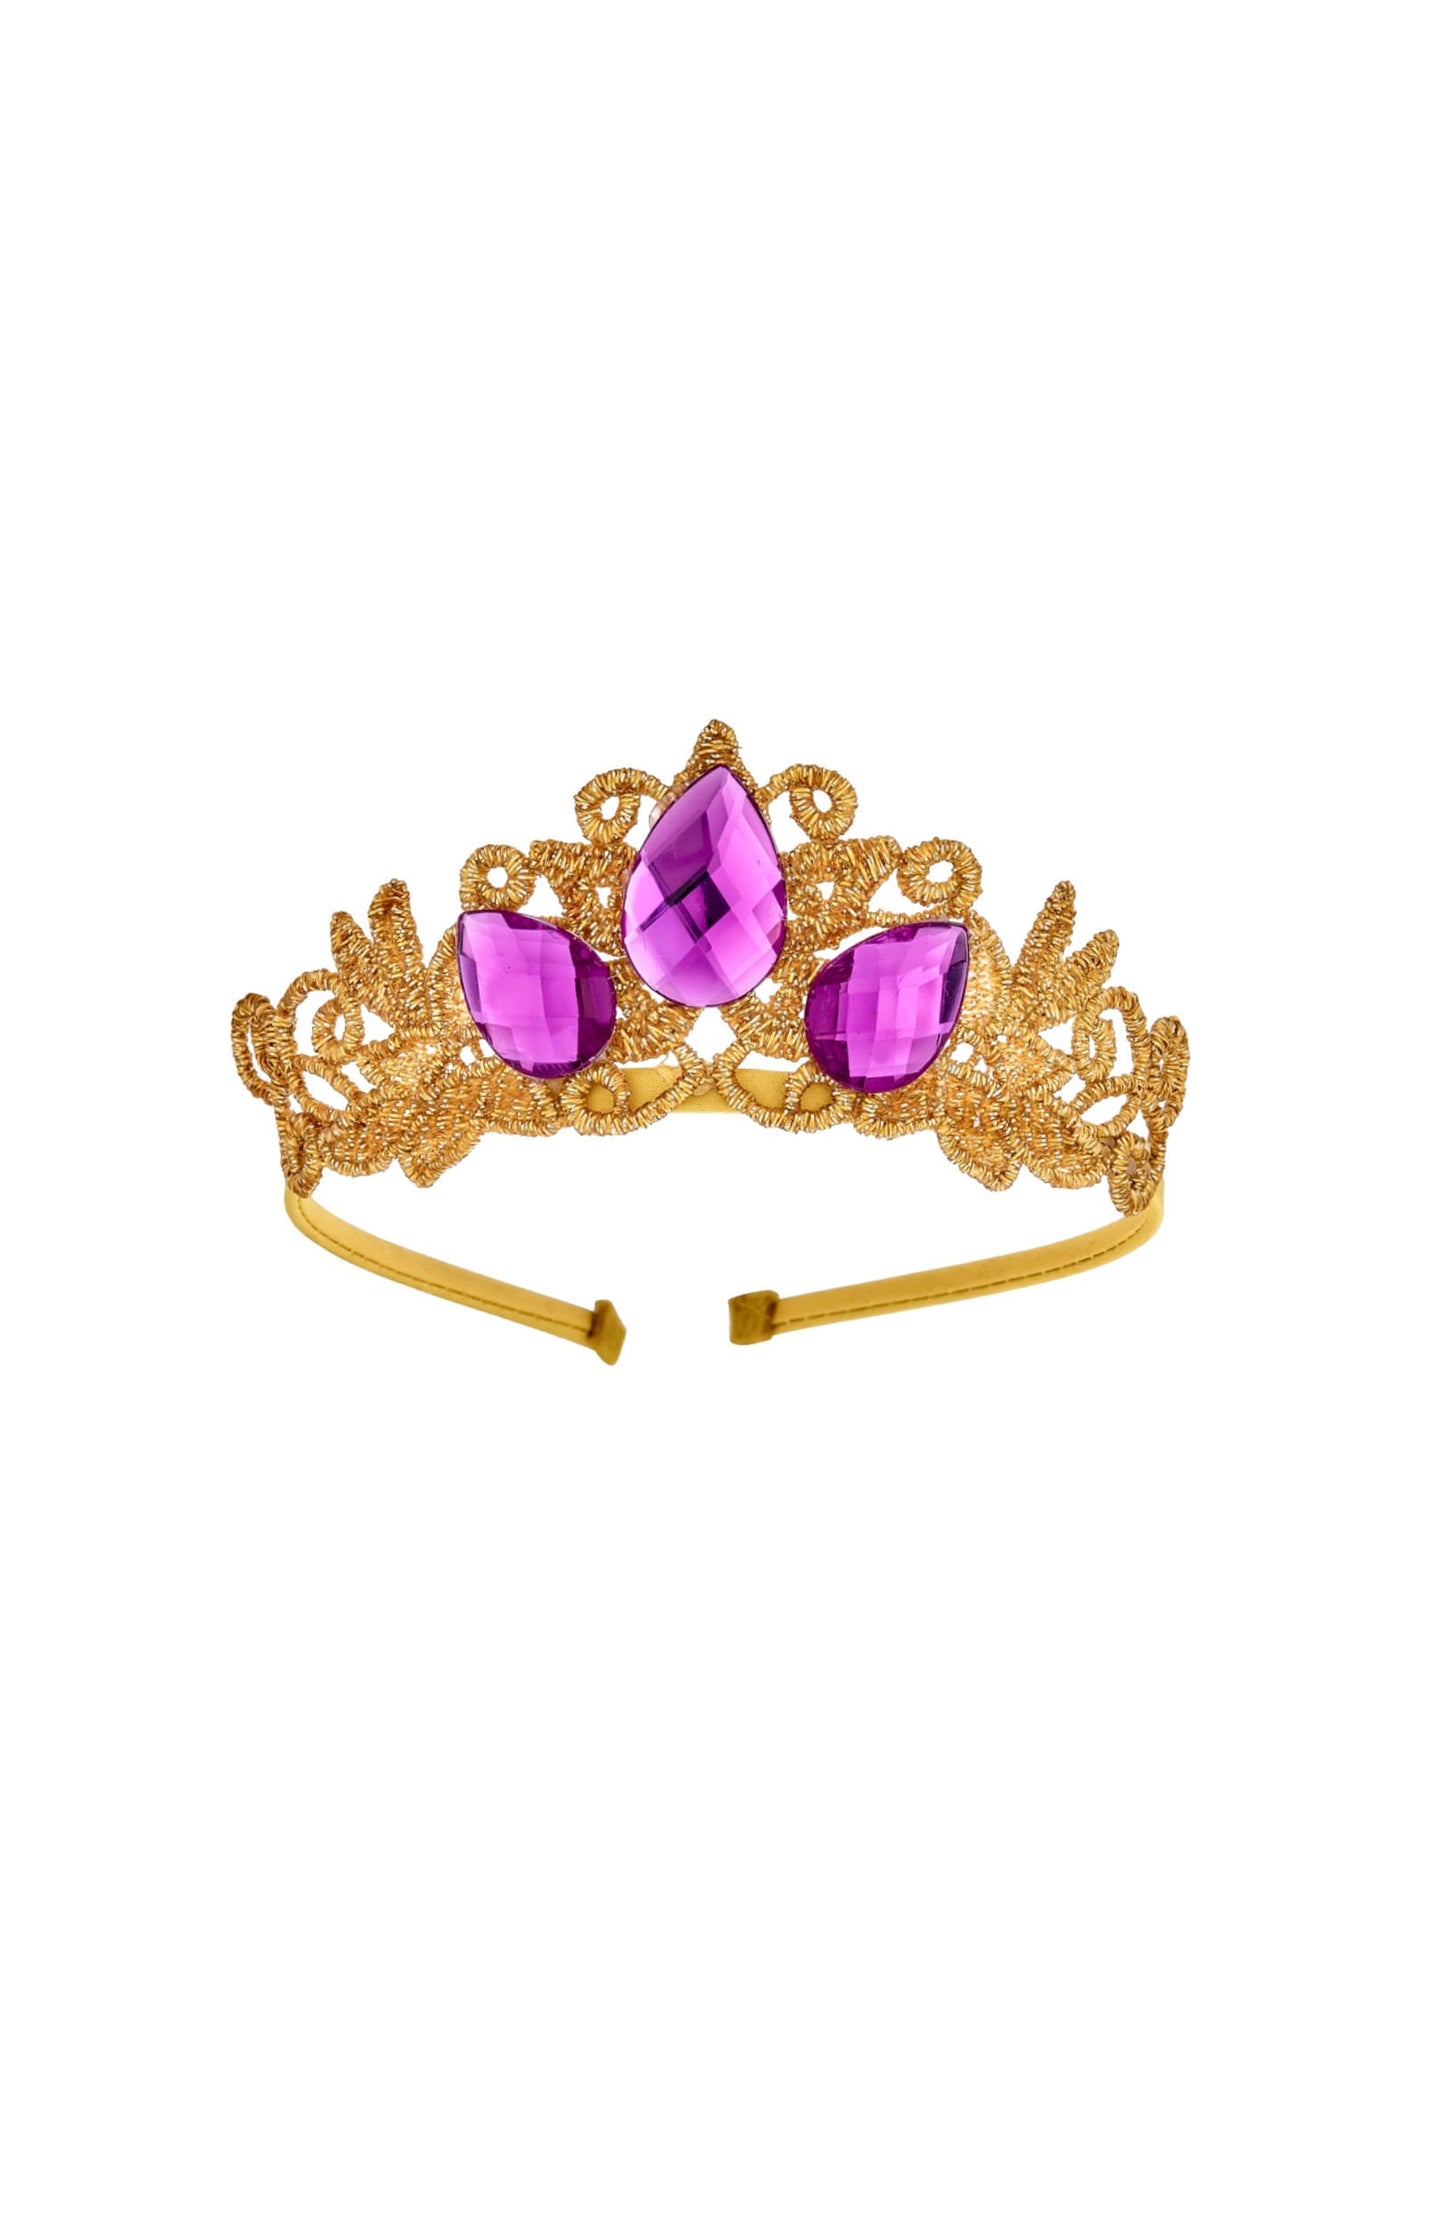 Trio Gem Princess Crown - Purple Gem